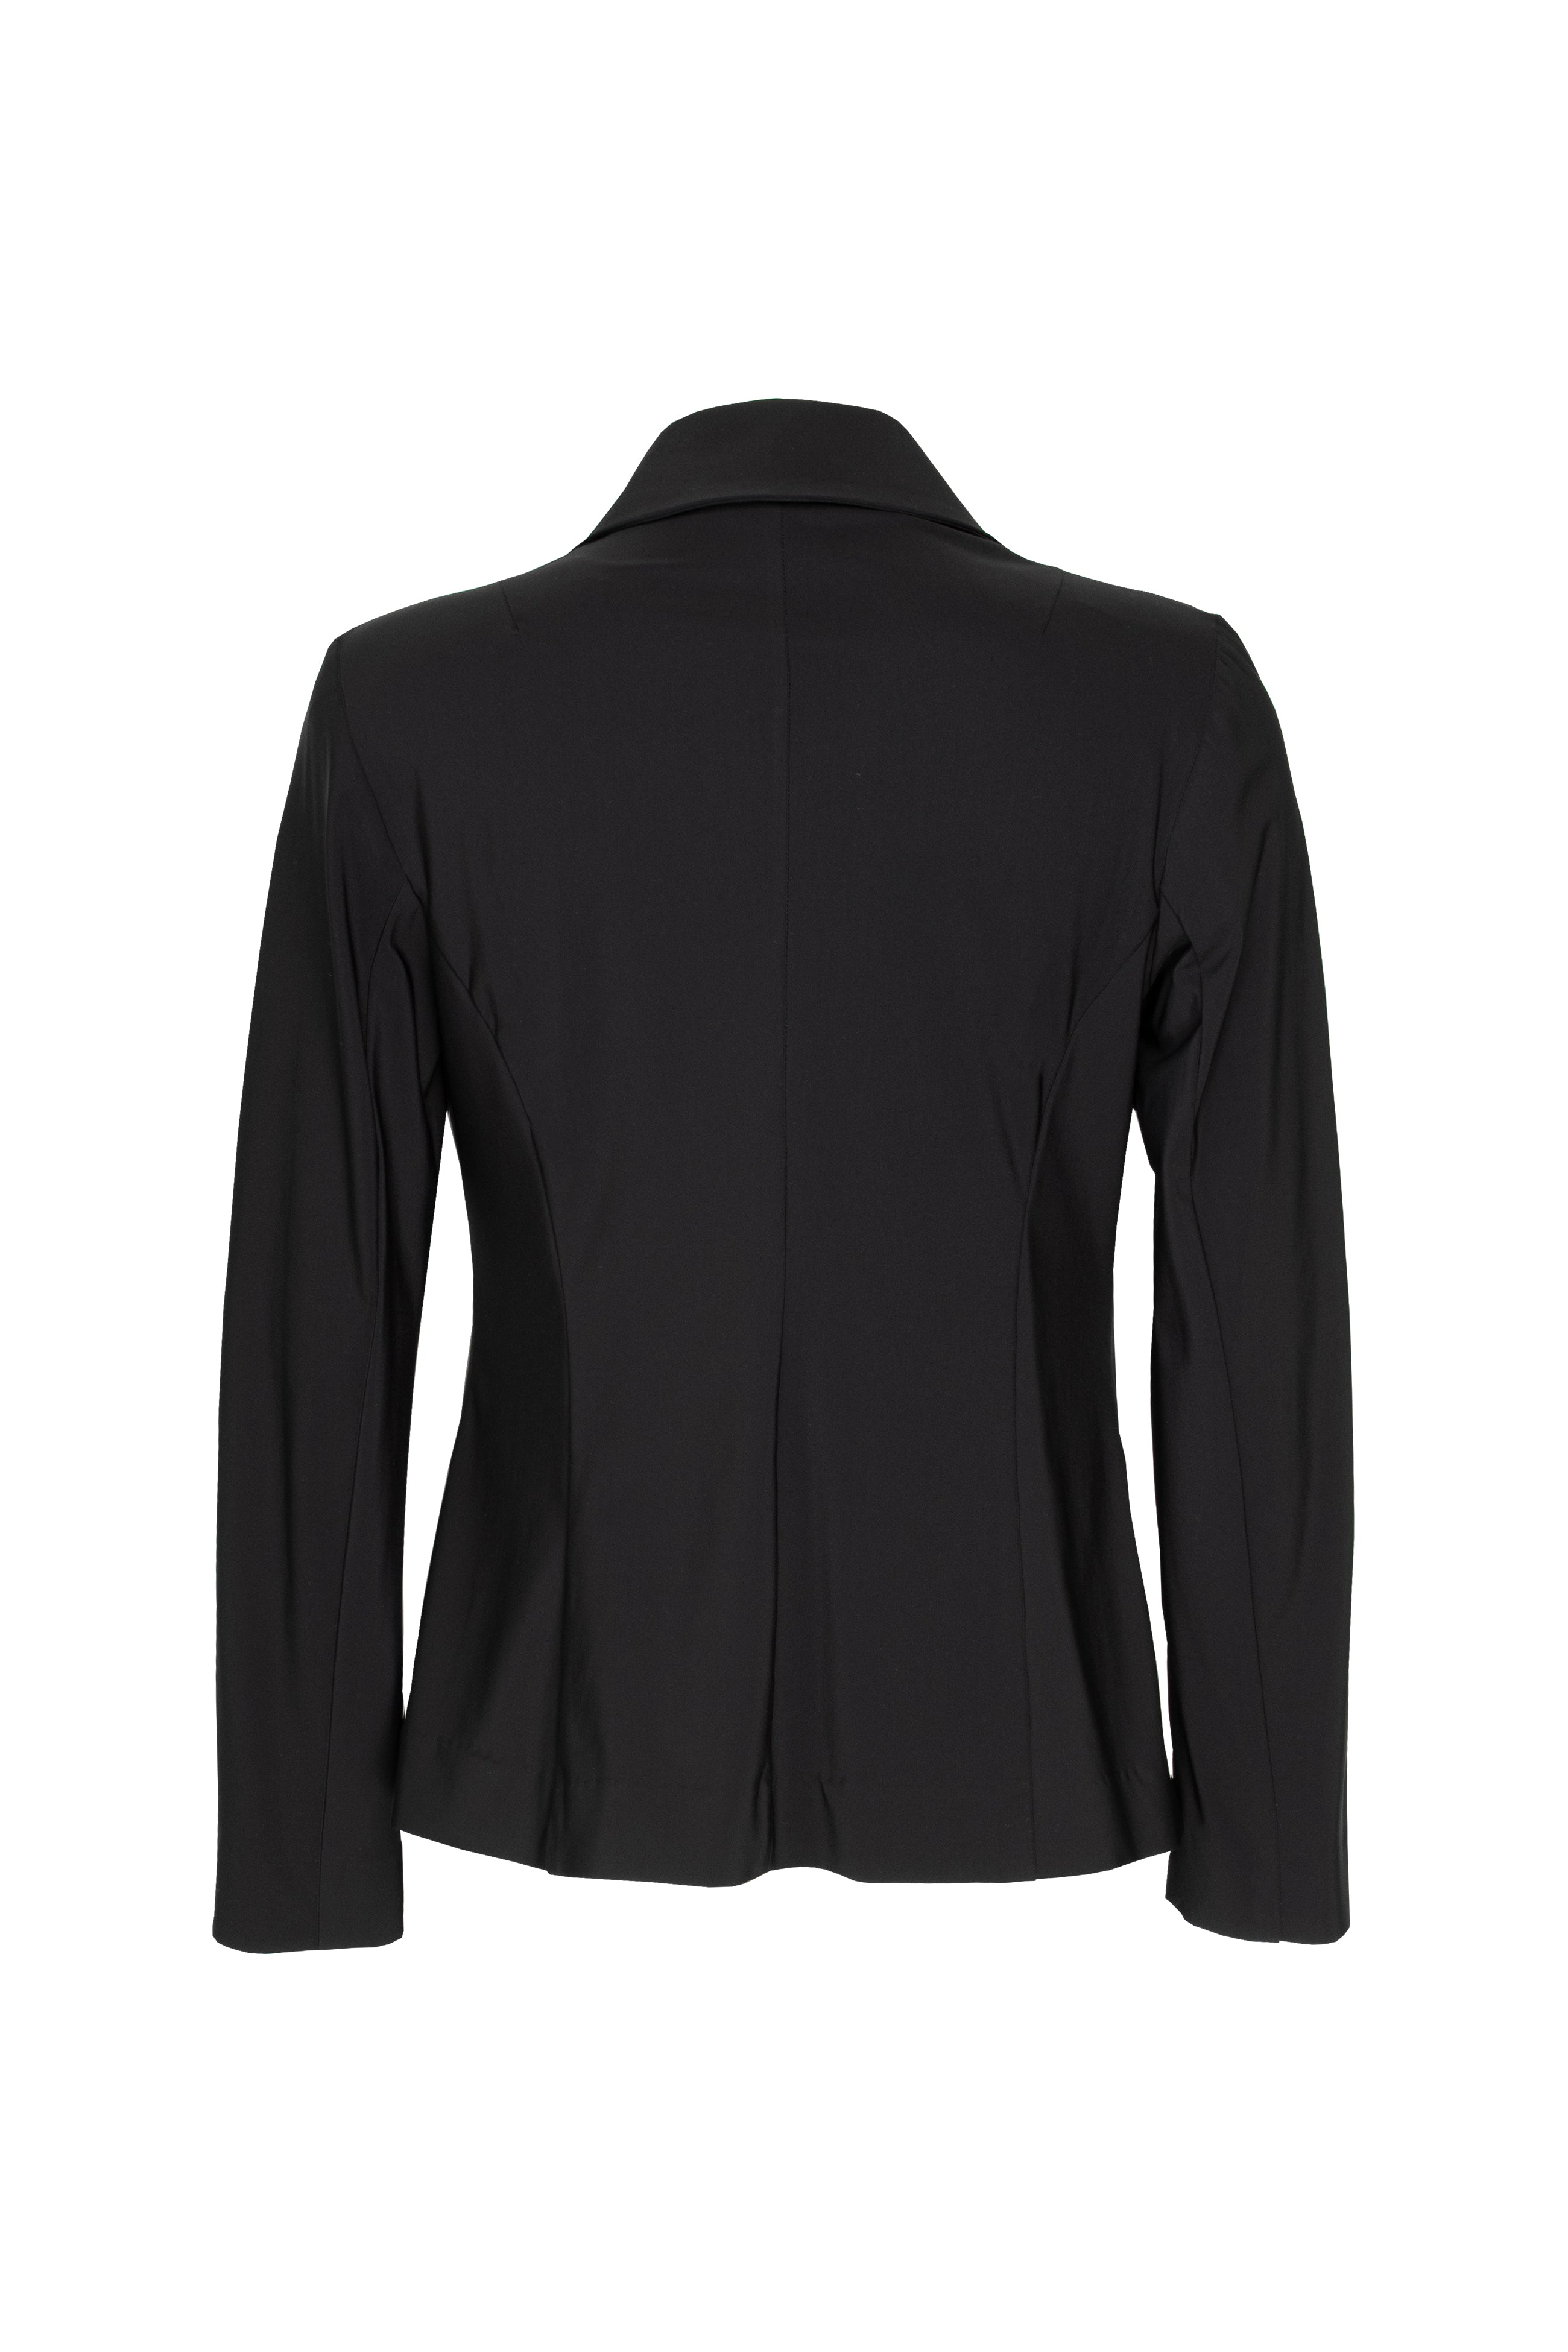 High Revere Collar Jacket - Black Jersey 6052